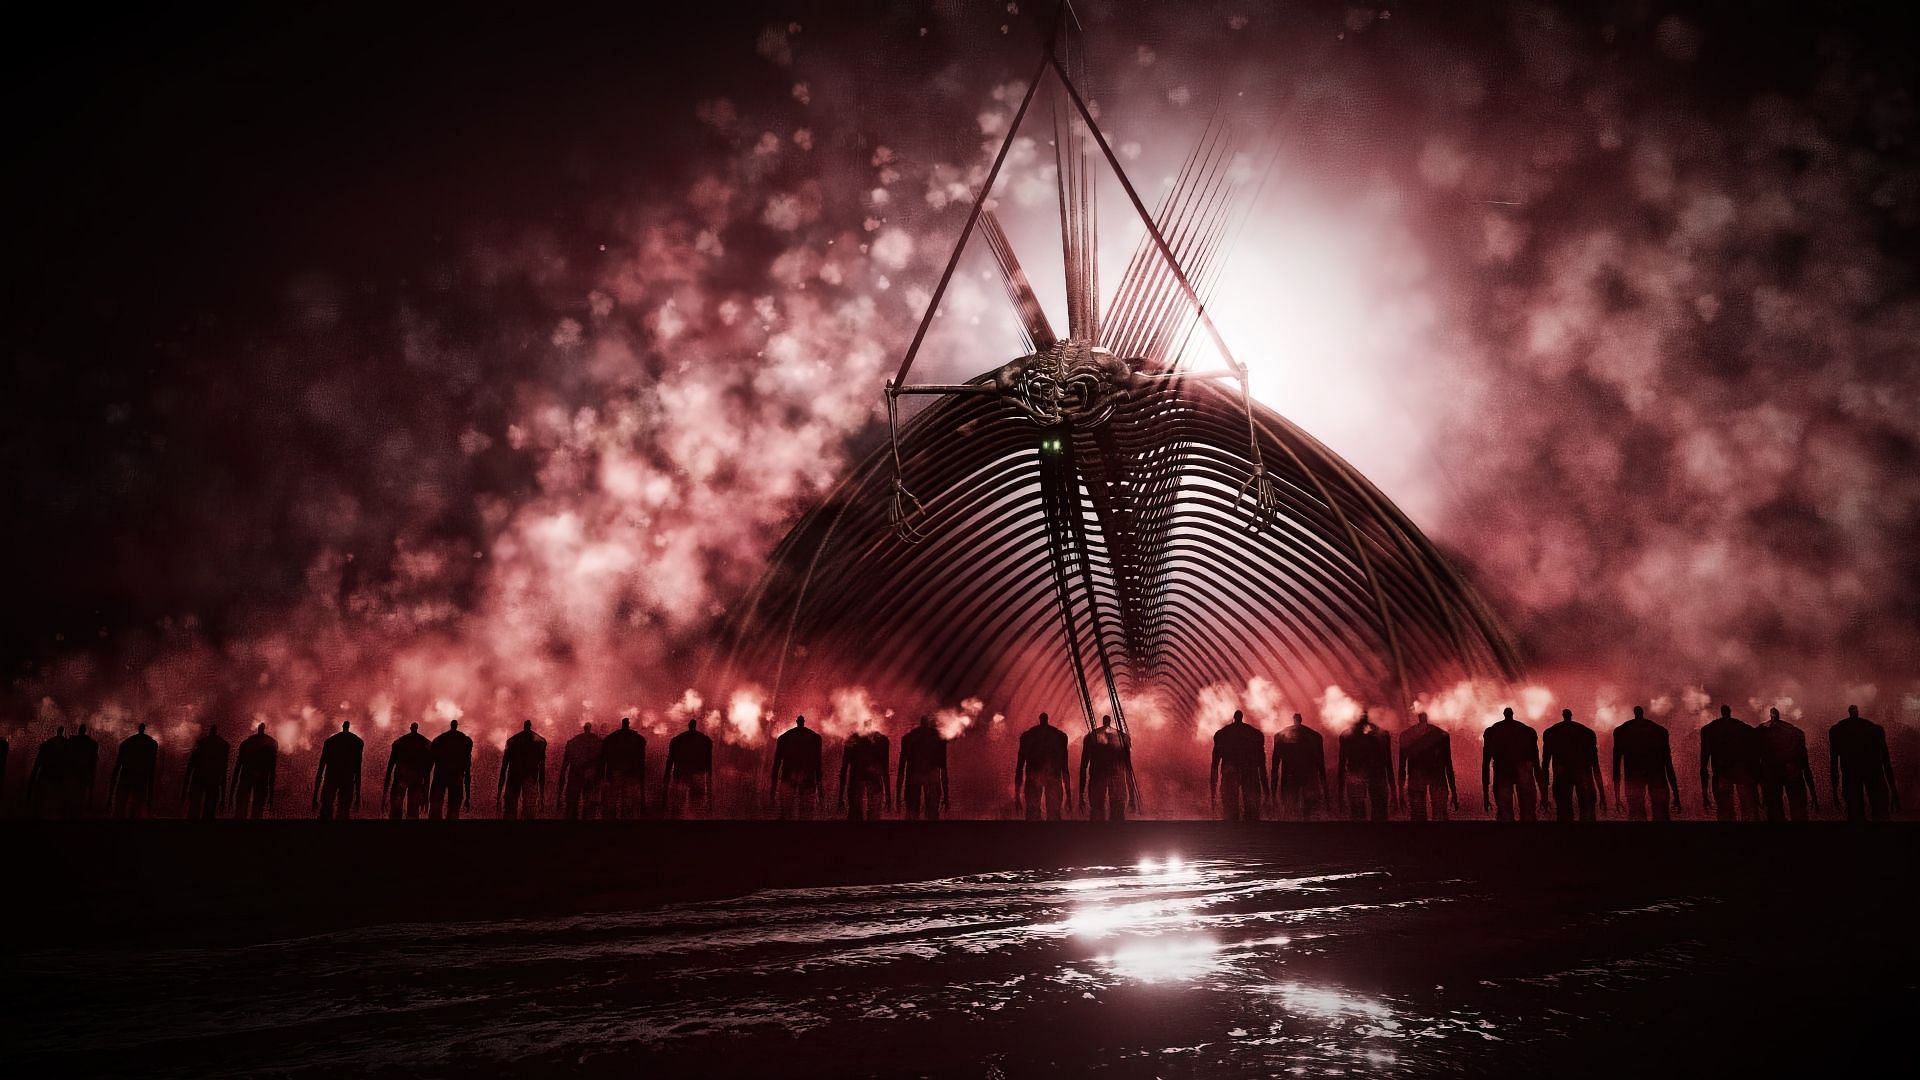 The Rumbling from Attack on Titan (Image via Kodansha)